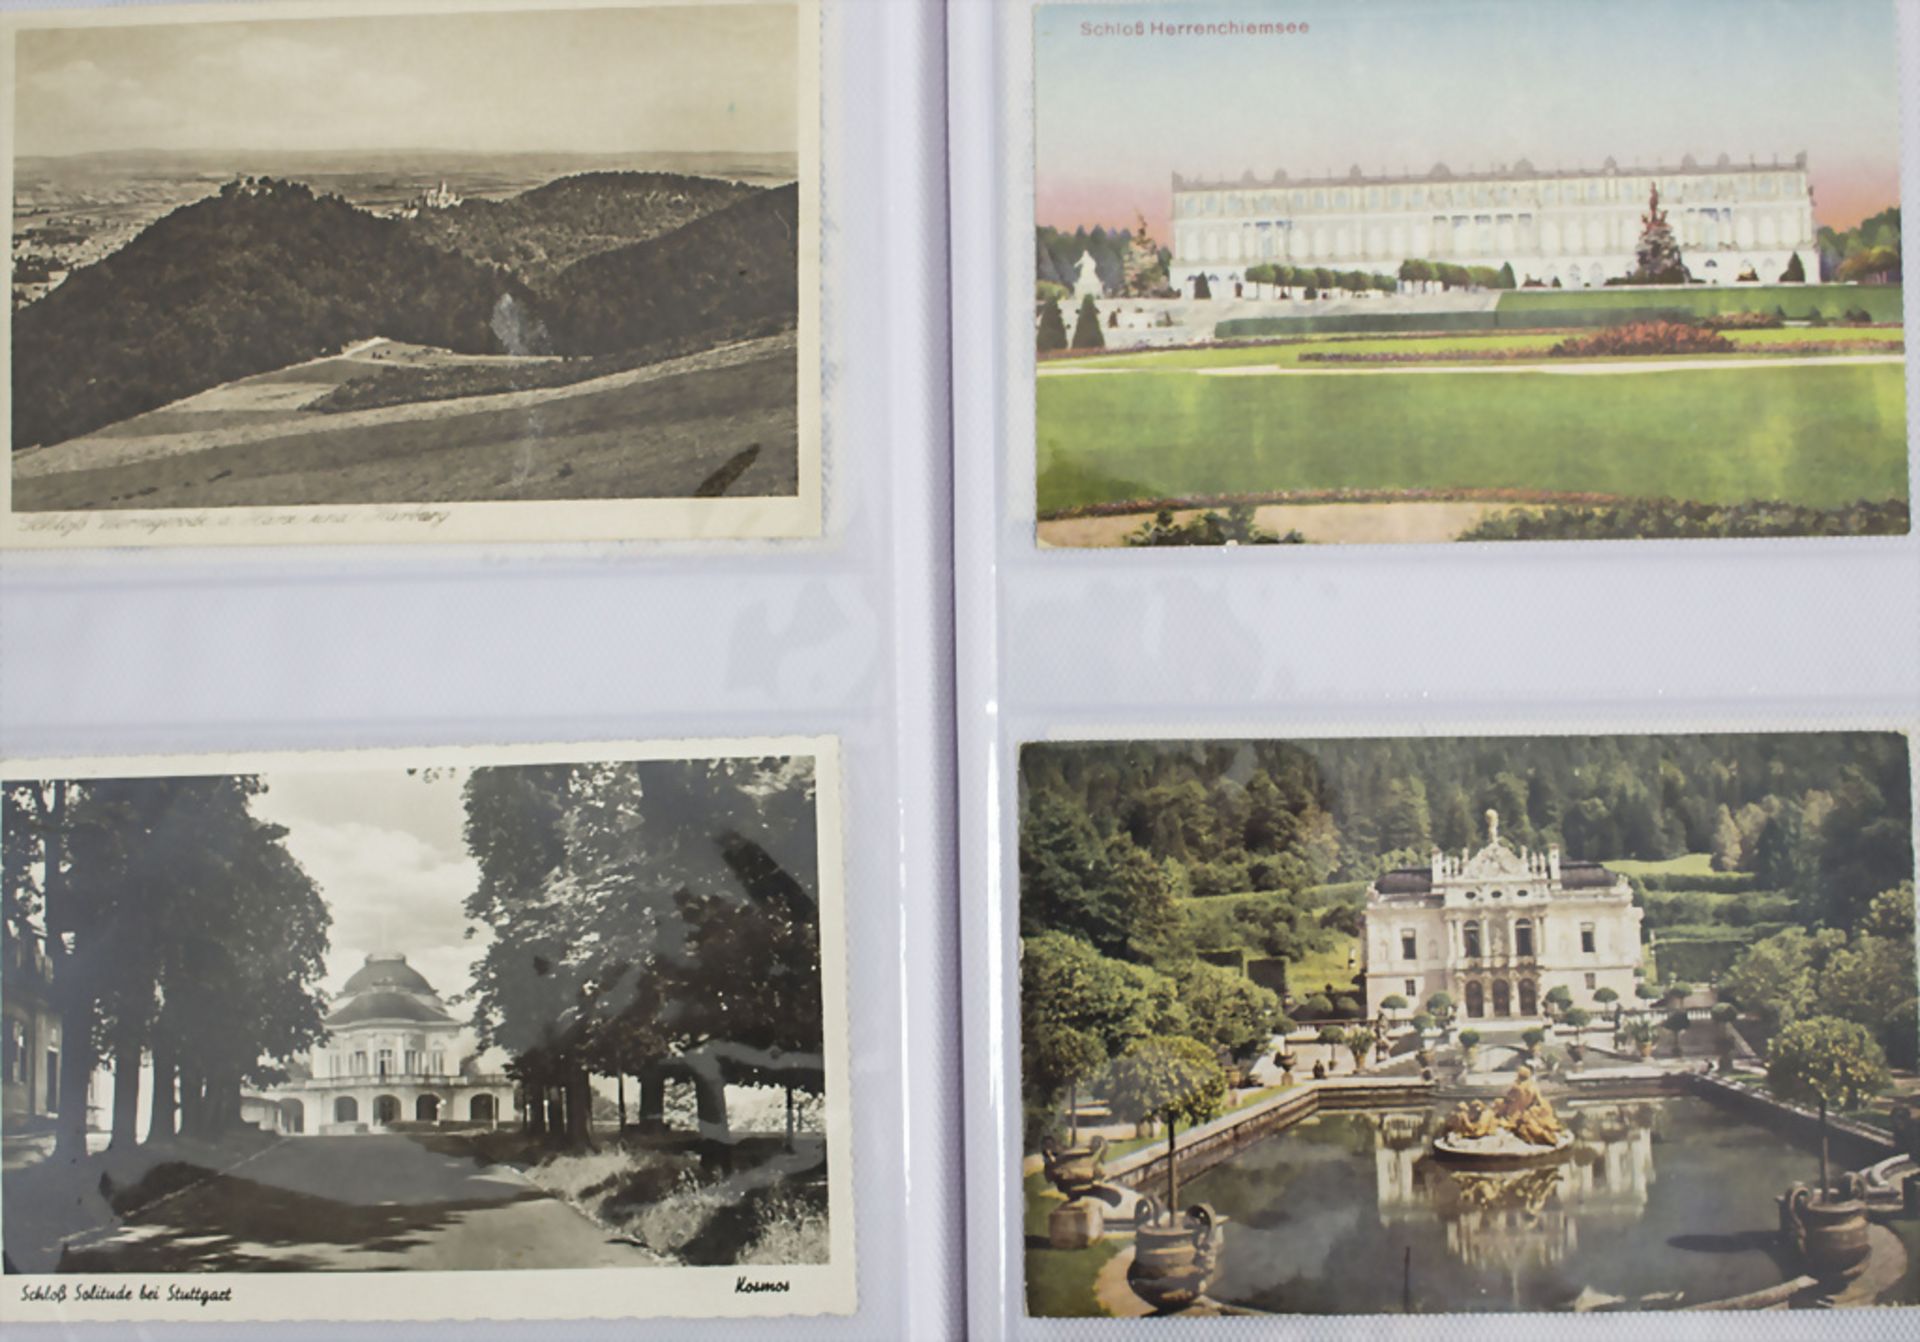 Album Postkarten 'Schlösser' / An album with postcards 'Castles'